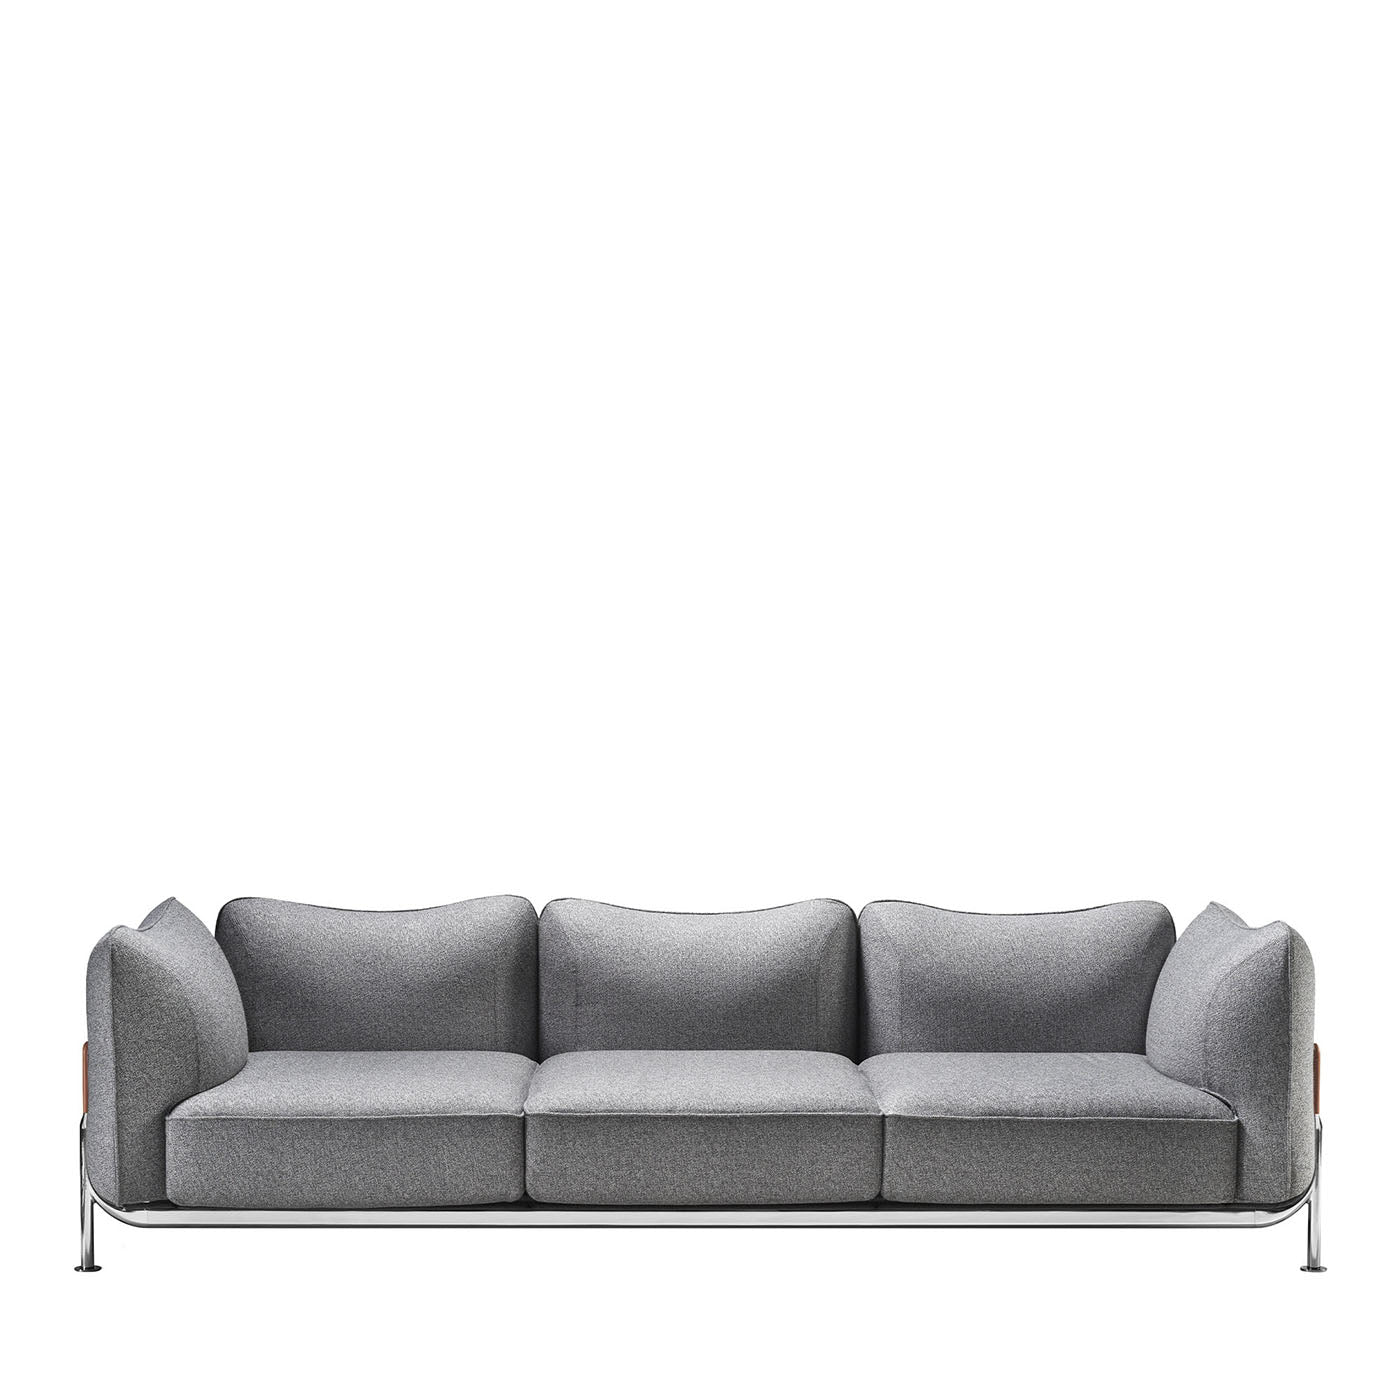 Tasca 3-Sitzer Sofa aus grauem Stoff - Hauptansicht